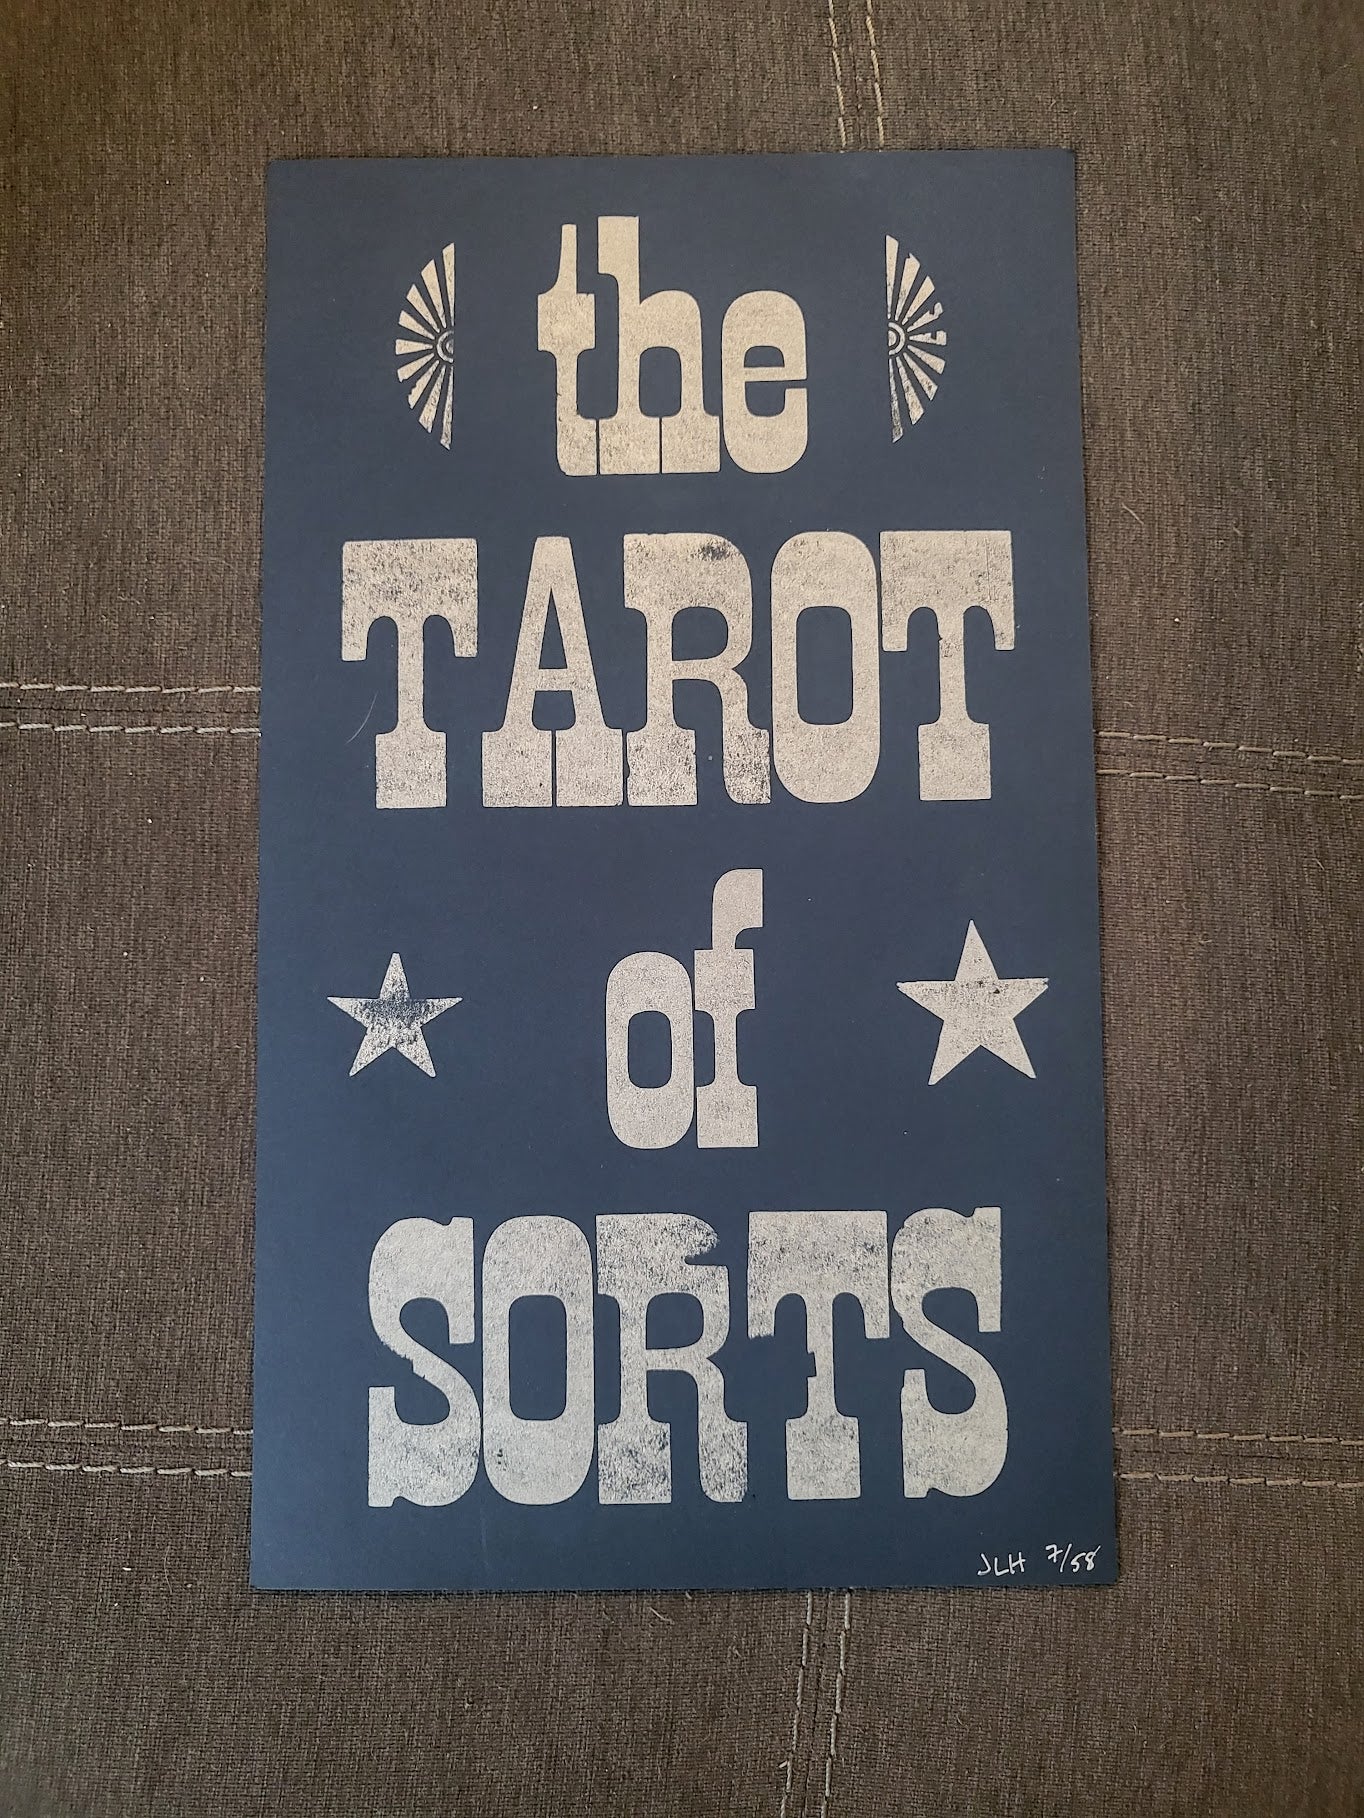 Tarot of Sorts Poster